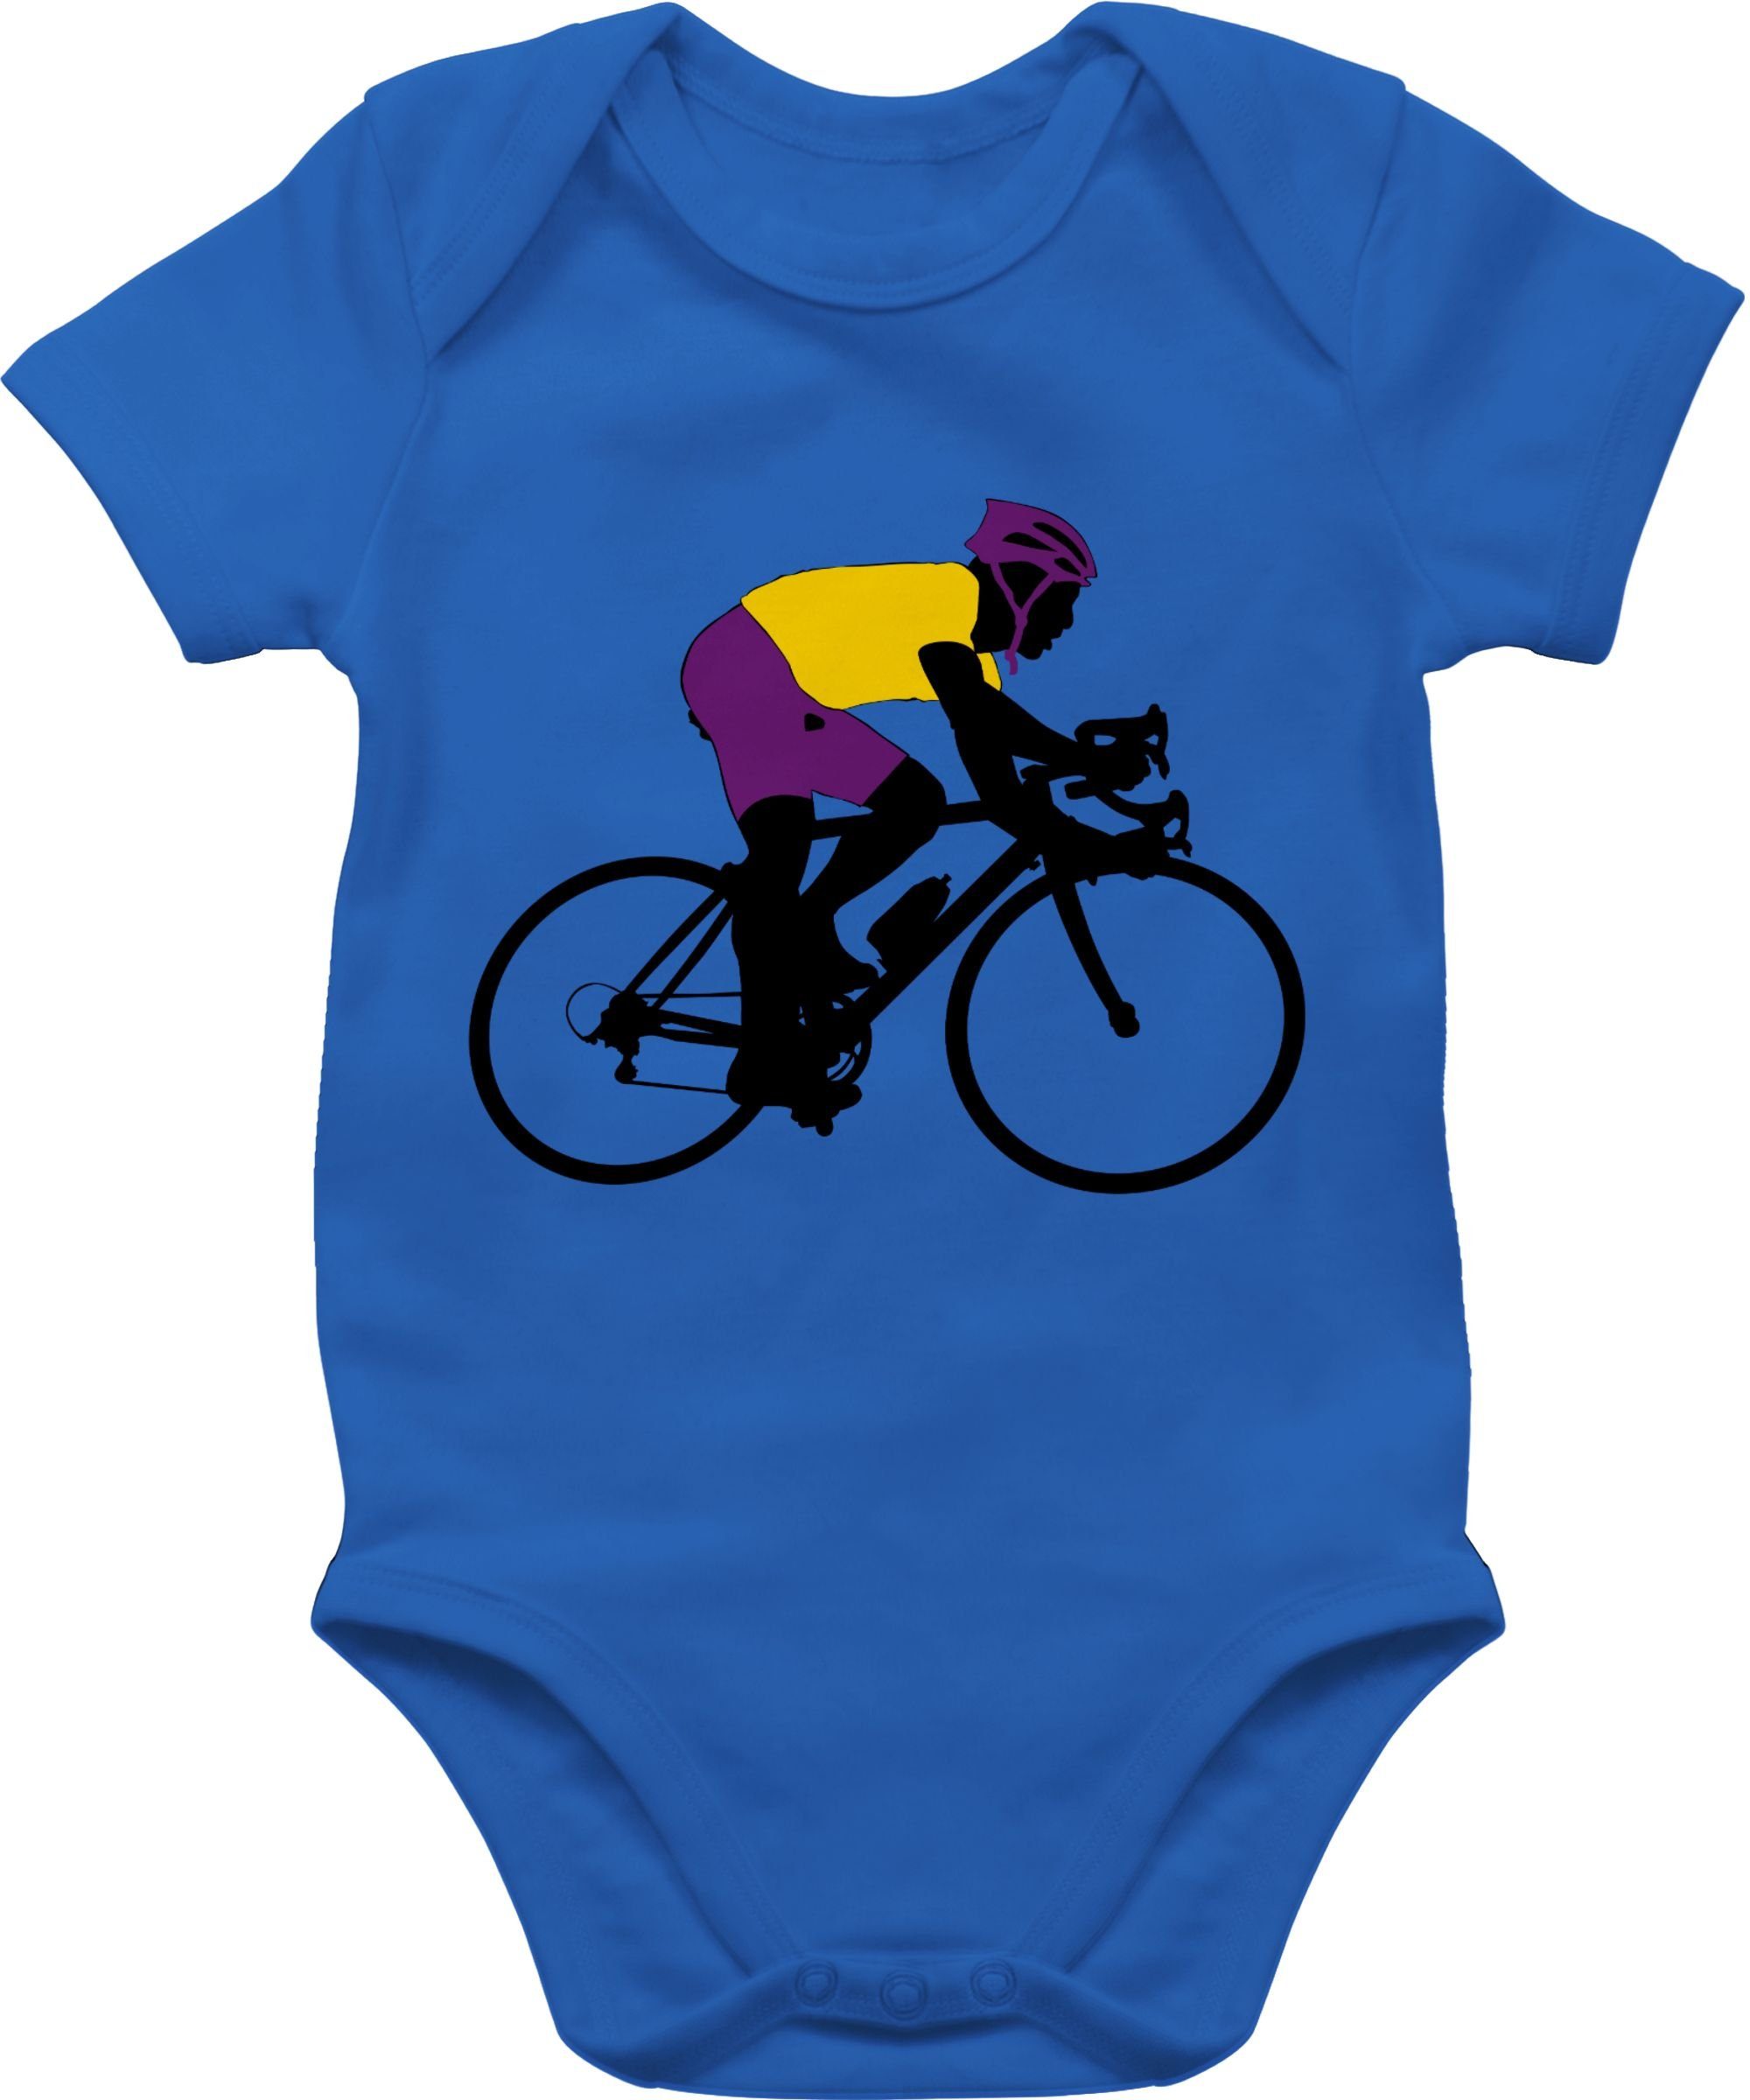 Shirtracer Shirtbody Rennrad Triathlon - Sport & Bewegung Baby - Baby Body  Kurzarm rennrad - lustige bodys baby - babybody mit spruch - biker strampler